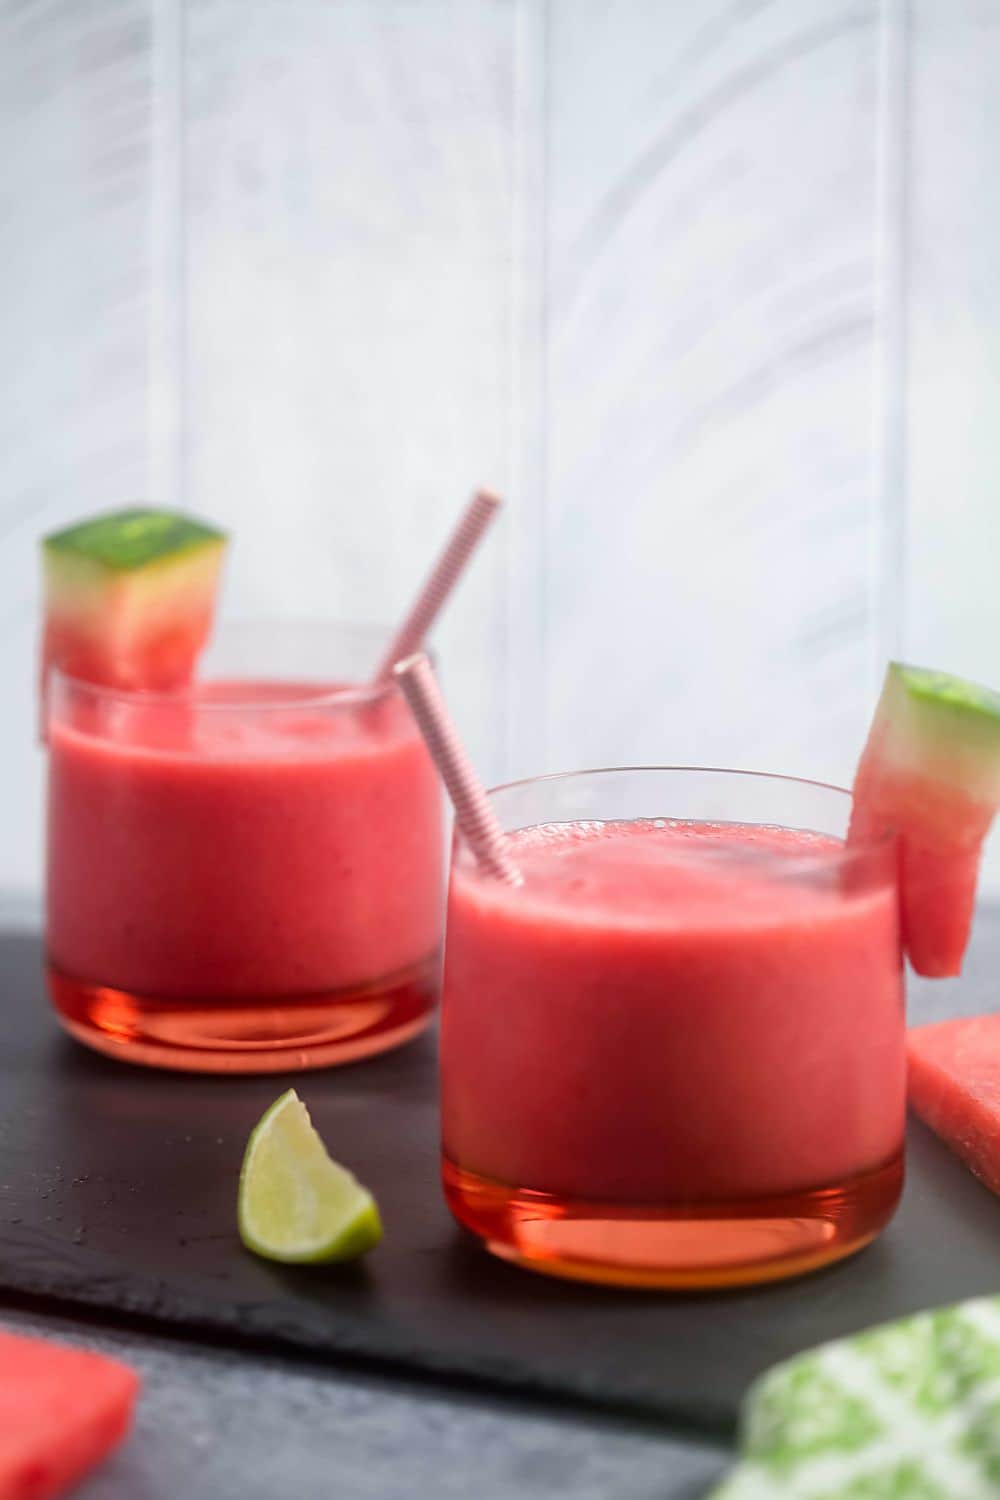 Easy Watermelon Smoothies 4 Ingredients